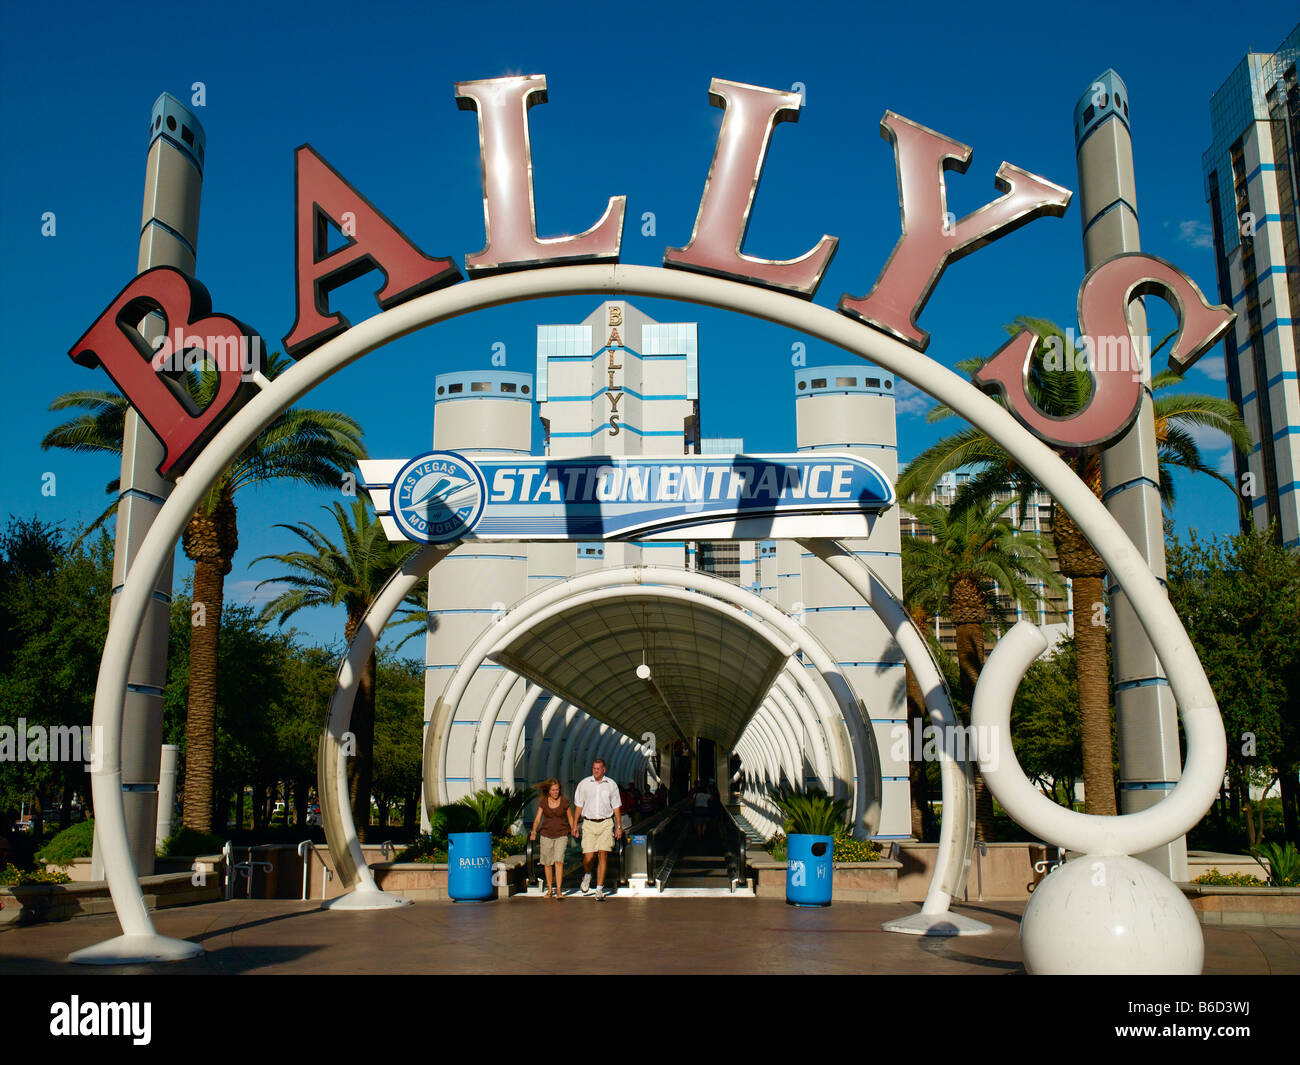 Las Vegas Strip Bally's Hotel & Monorail Entrance Stock Photo